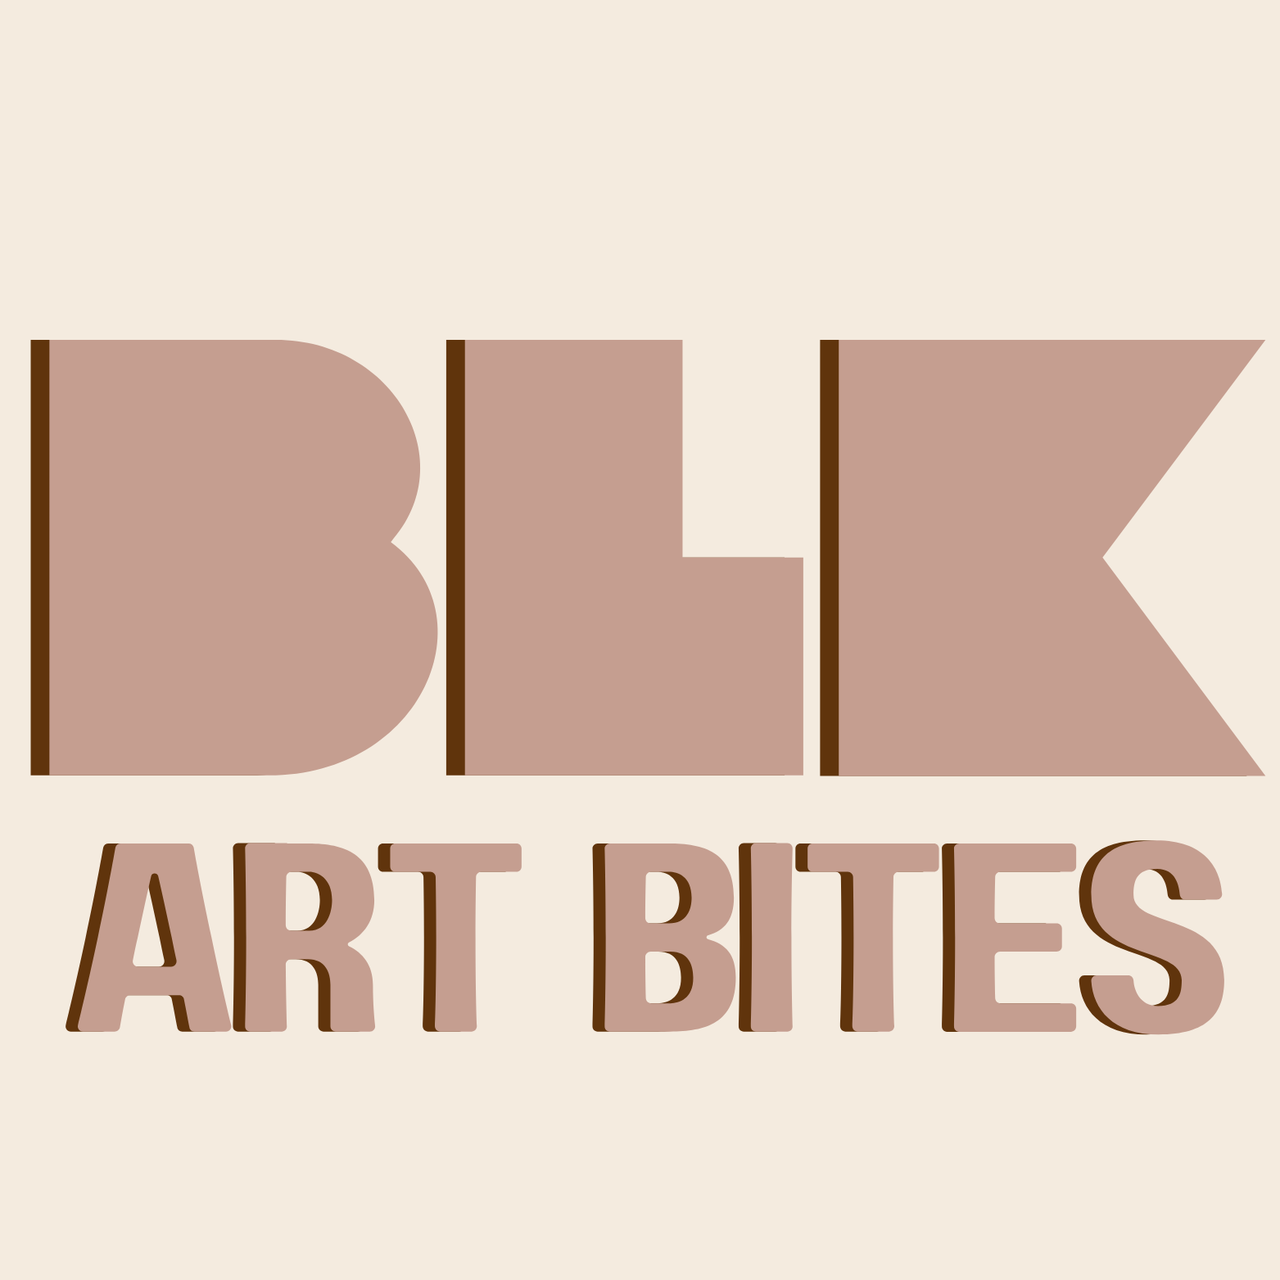 Life+Times: BLK ART BITES!